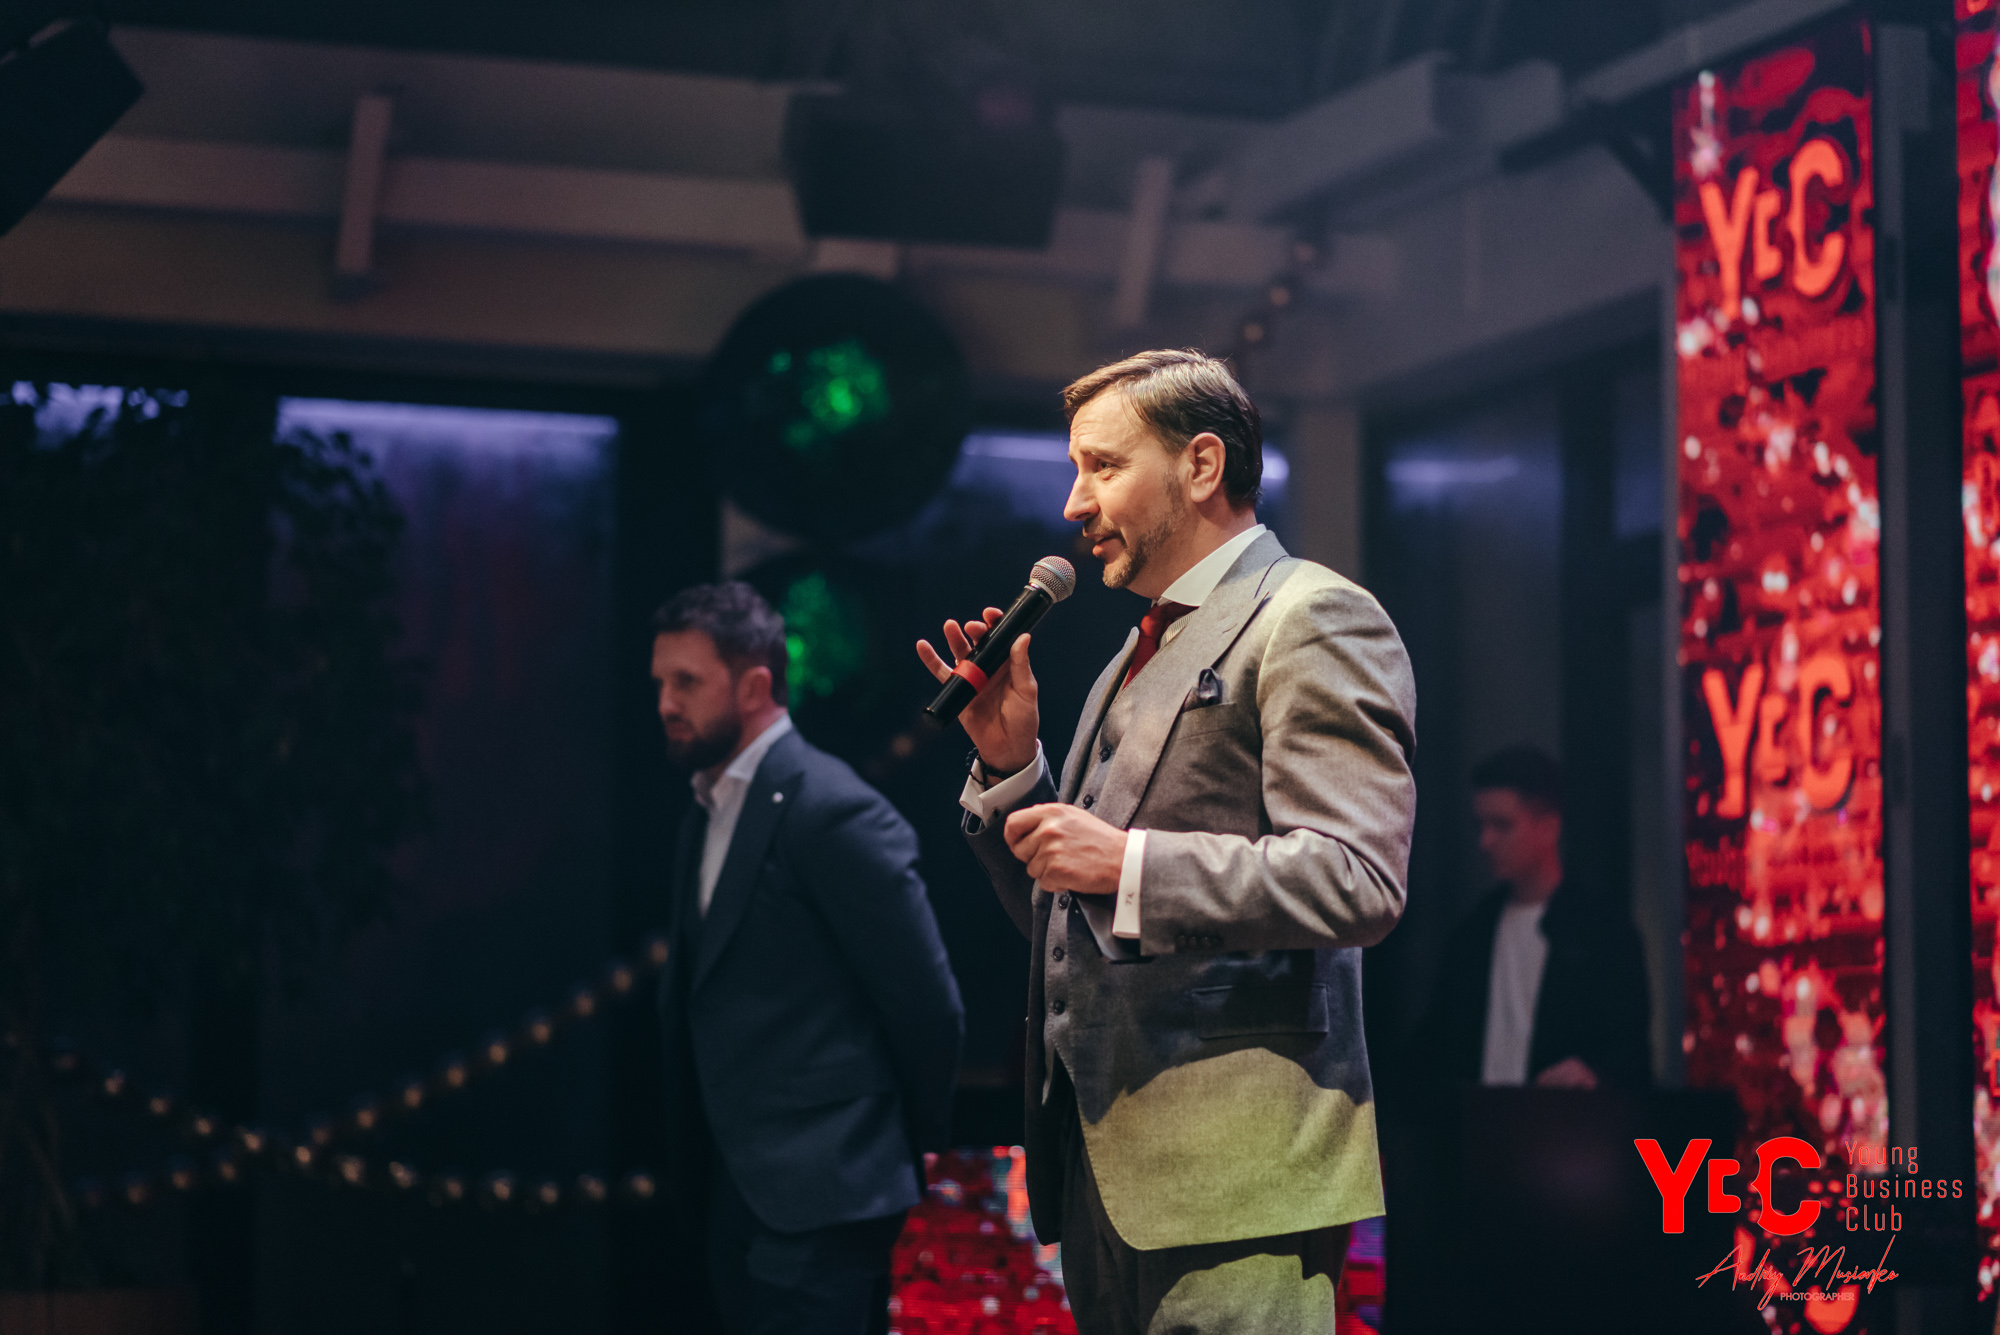 Новорічна вечірка Young Business Club у Queen Kyiv